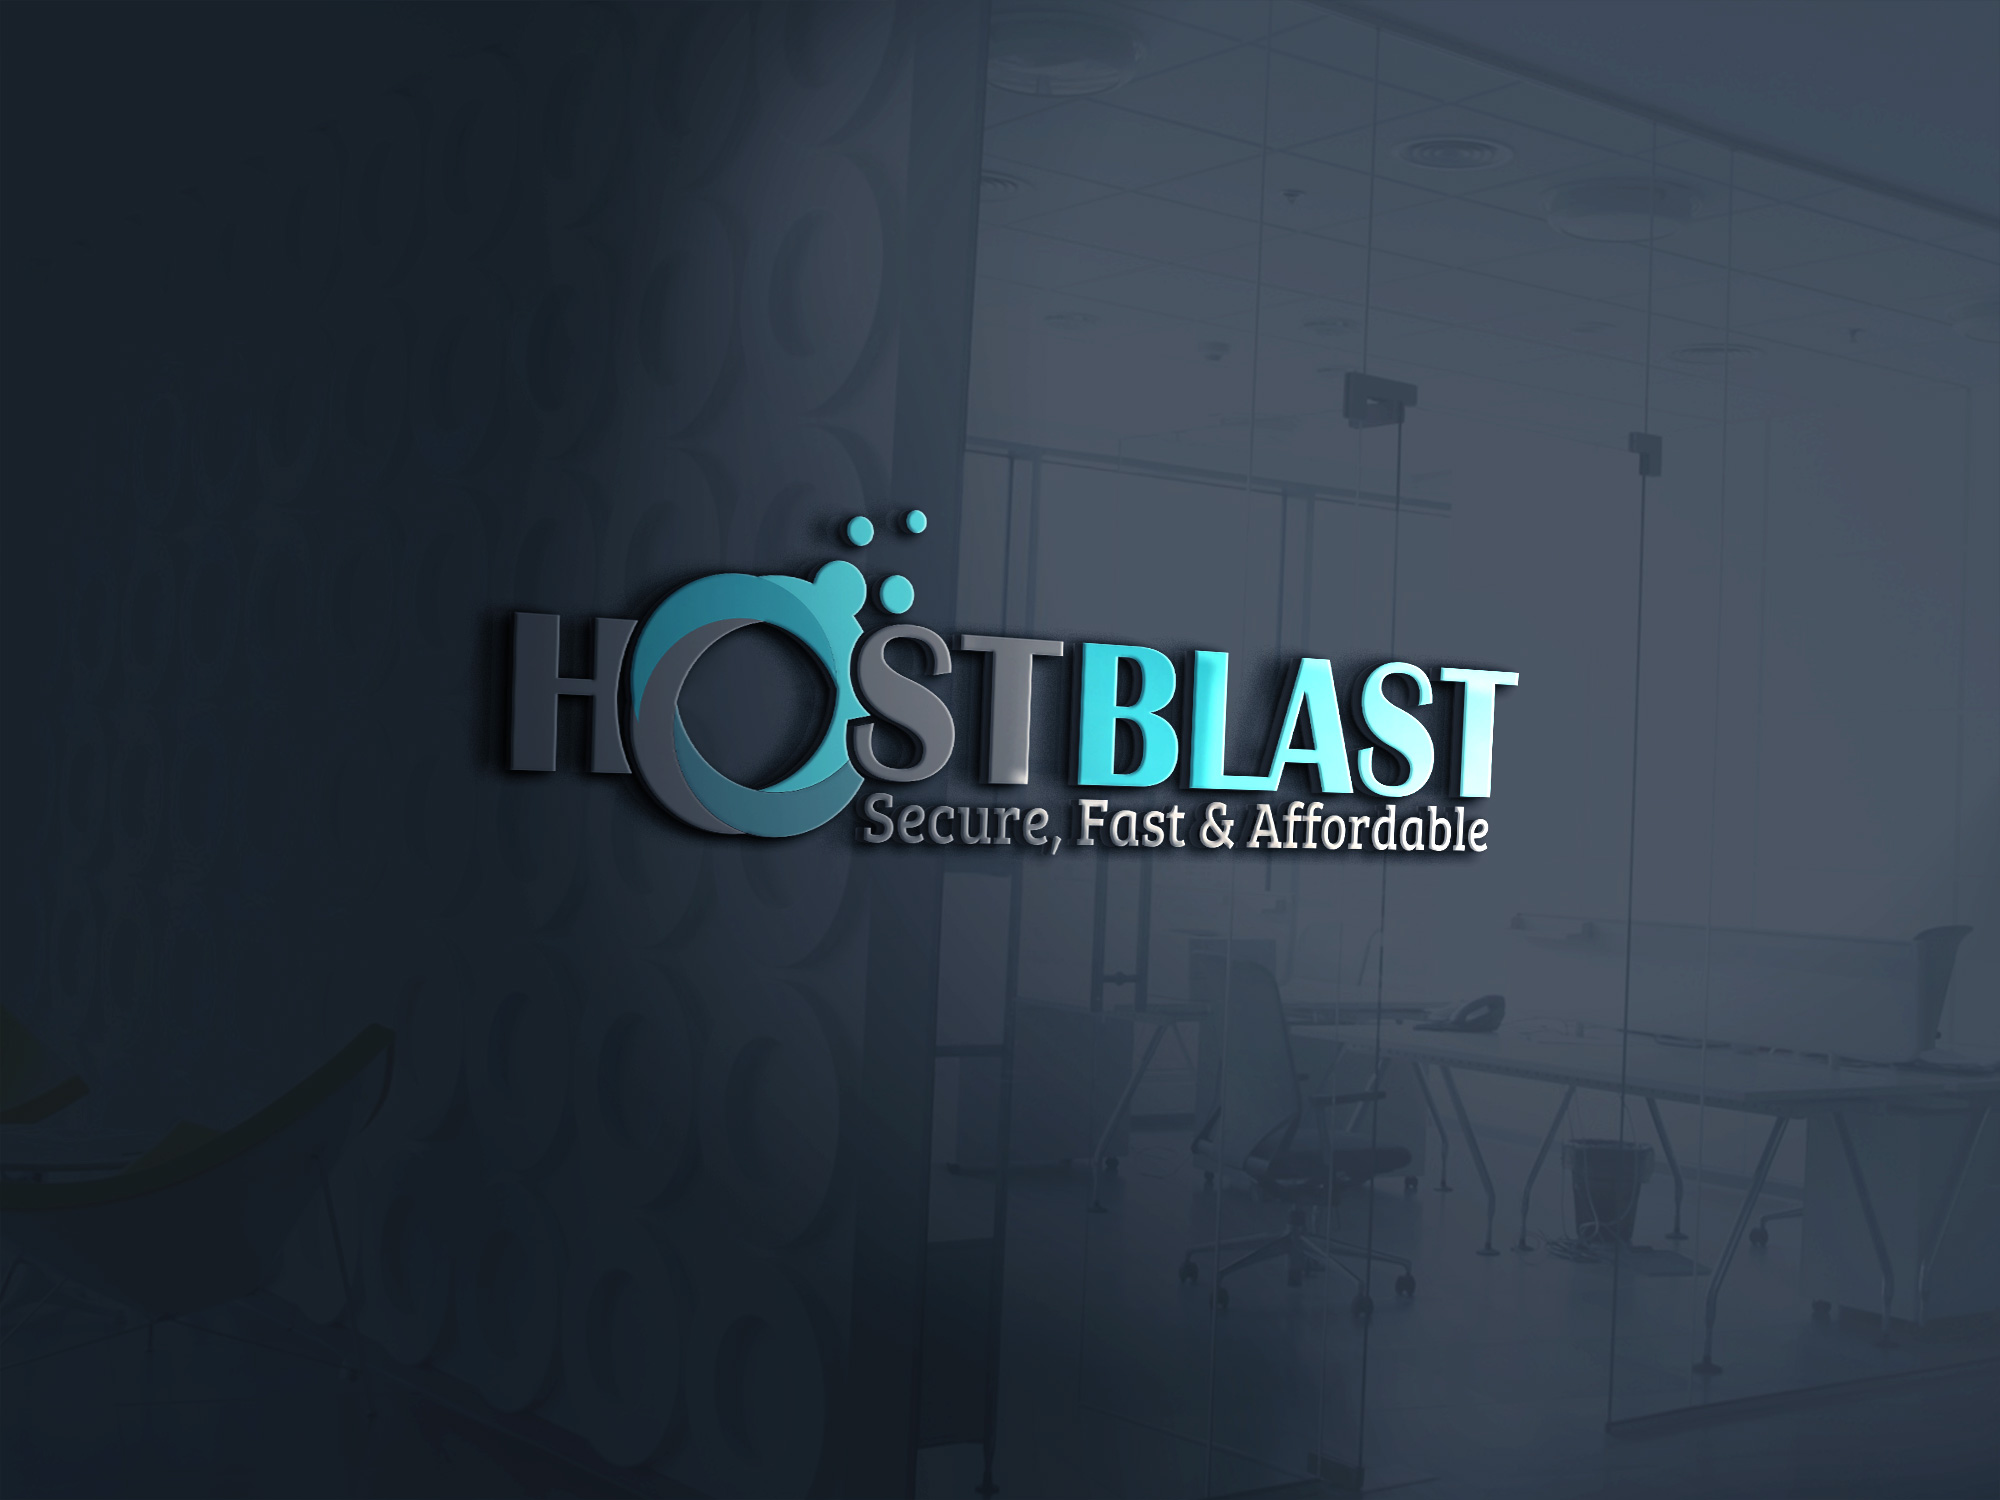 (c) Hostblast.net